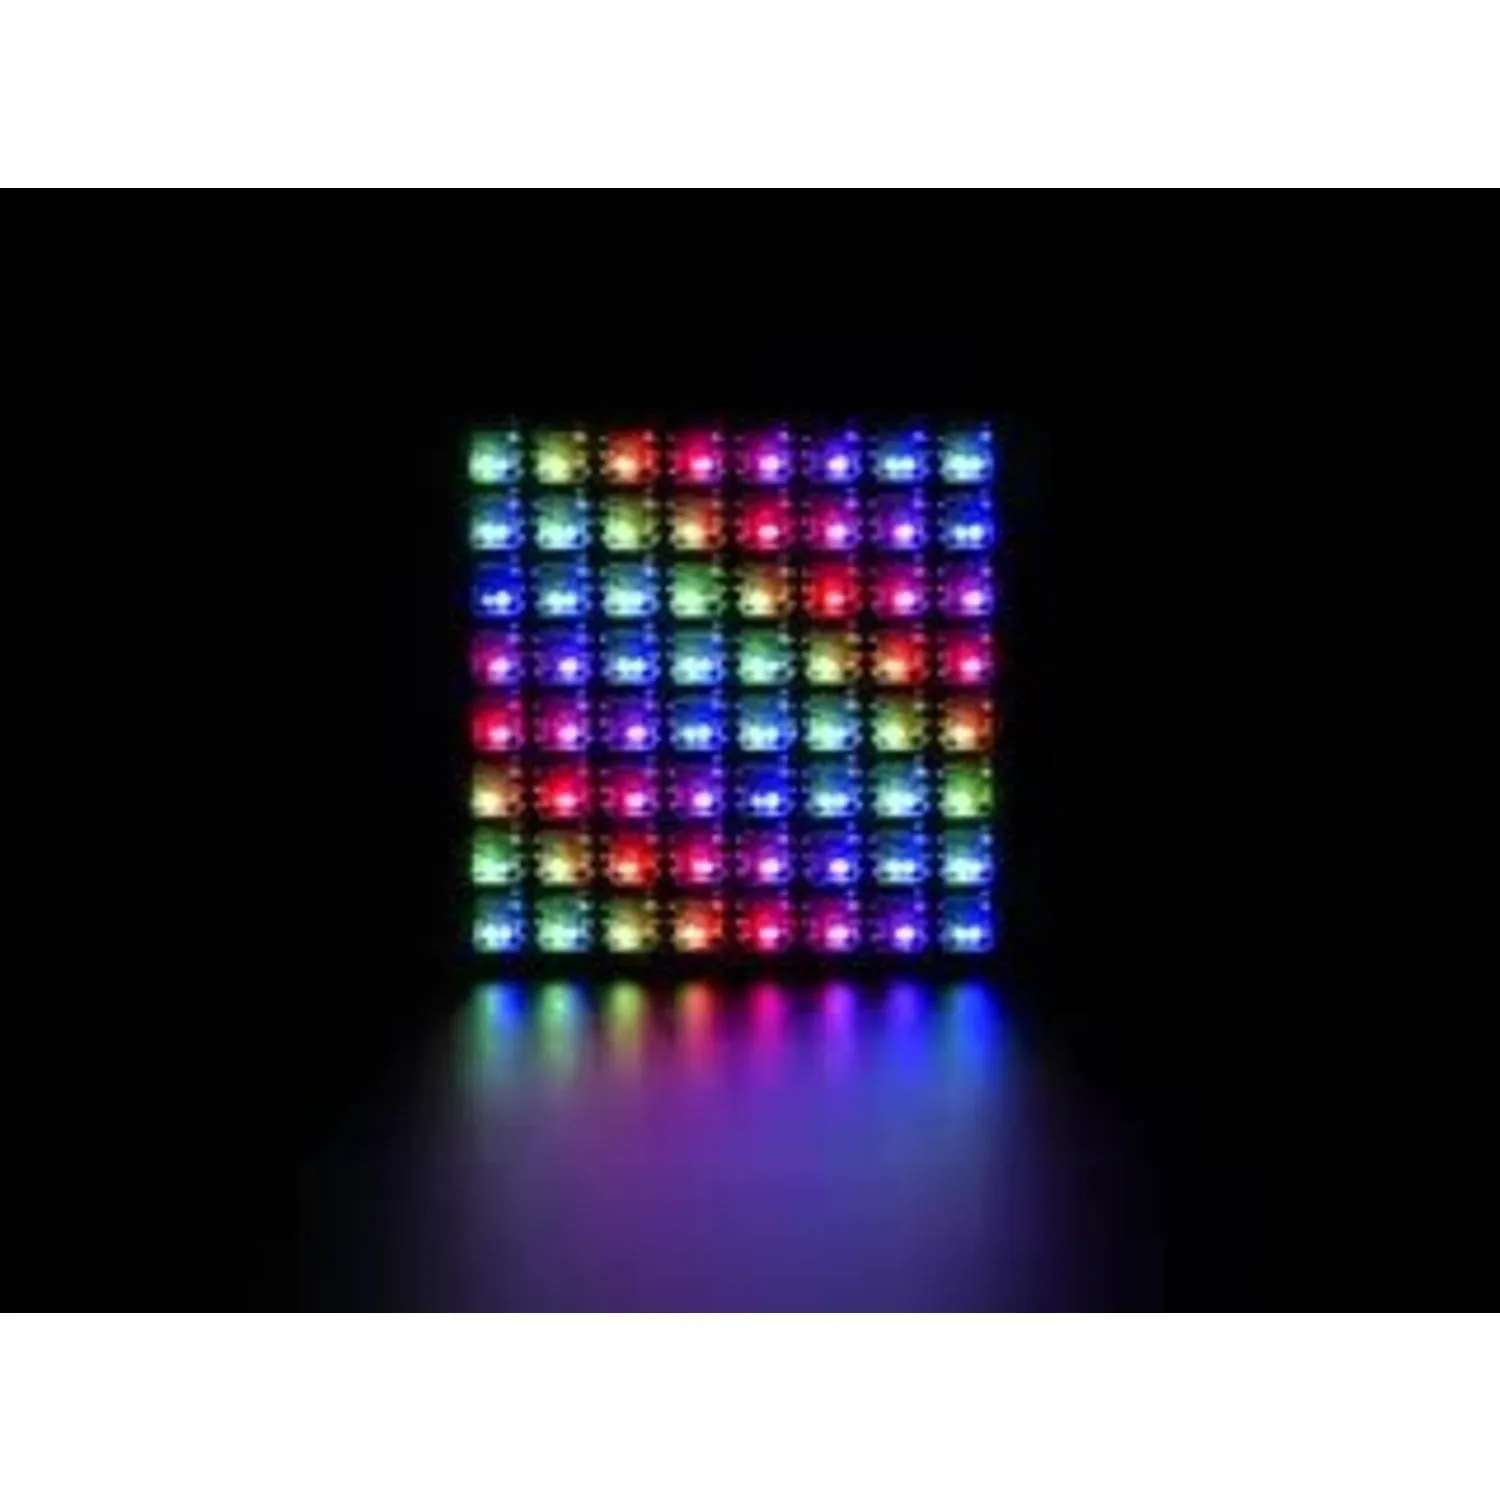 Photo of Adafruit DotStar High Density 8x8 Grid - 64 RGB LED Pixel Matrix